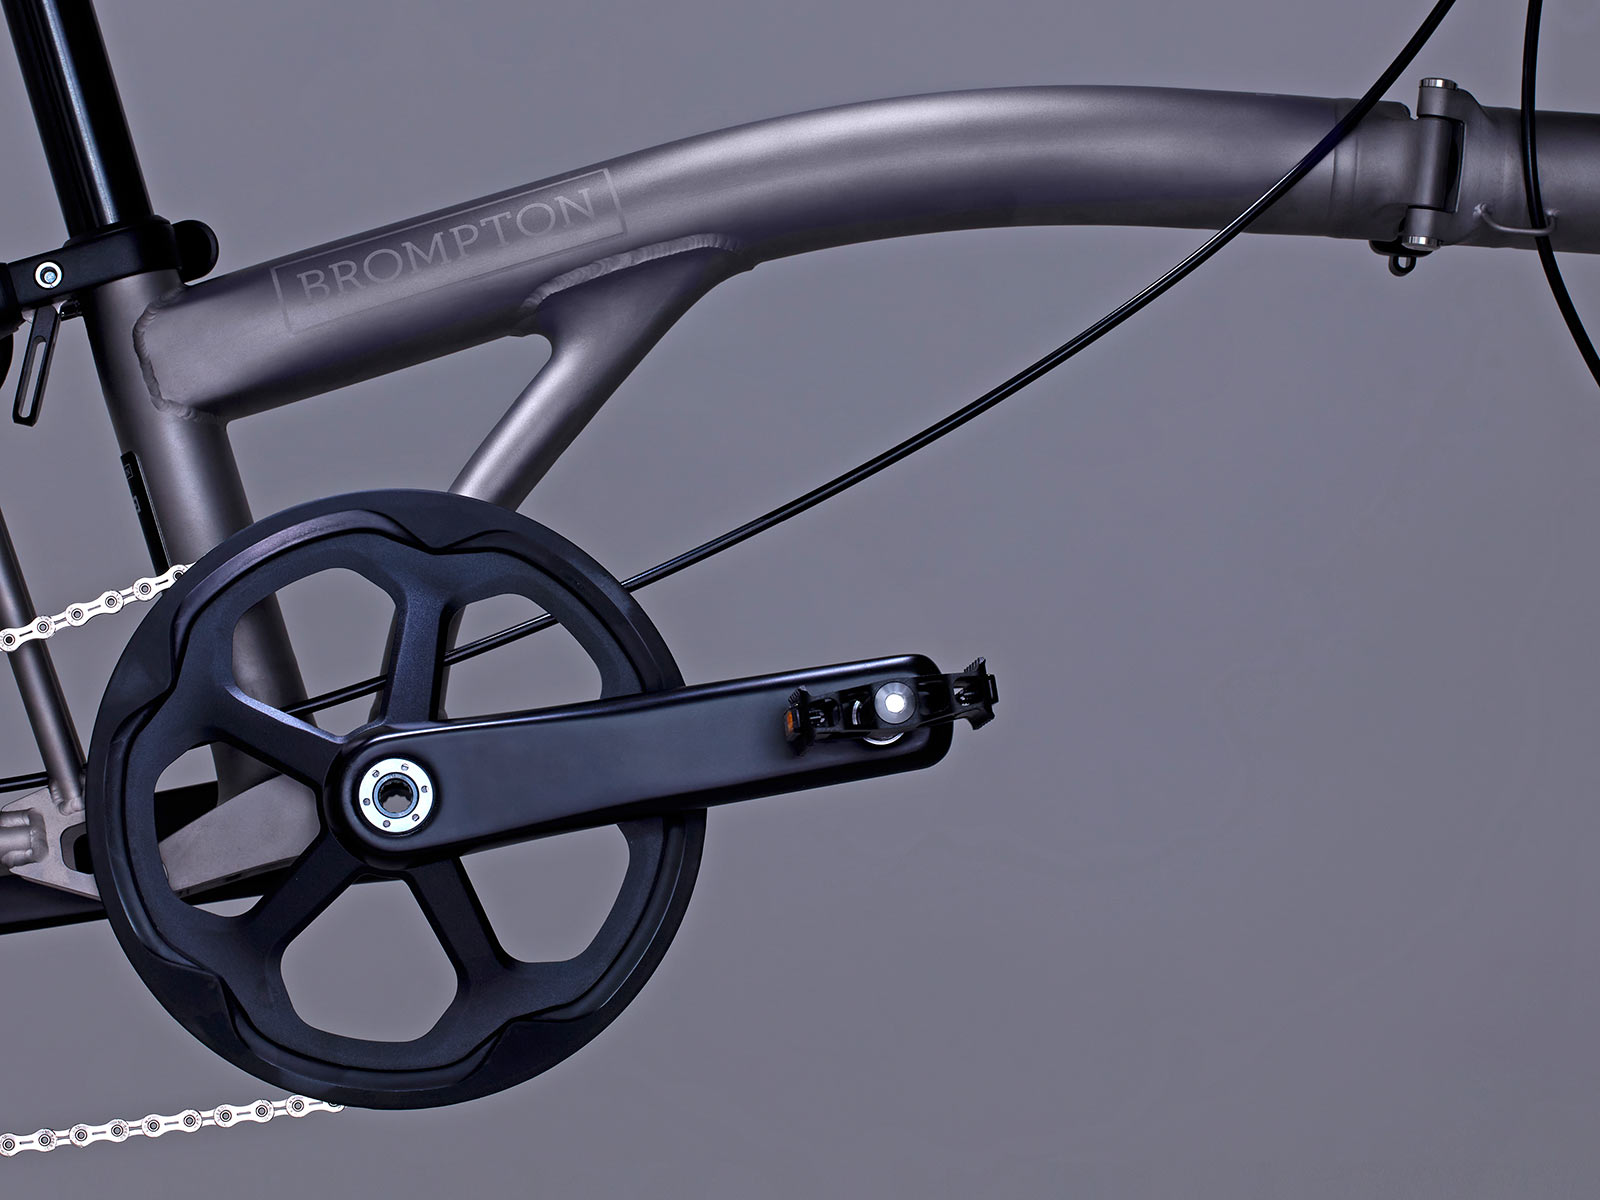 Brompton-T-Line-ultralight-titanium-folding-bike_carbon-crankset.jpg